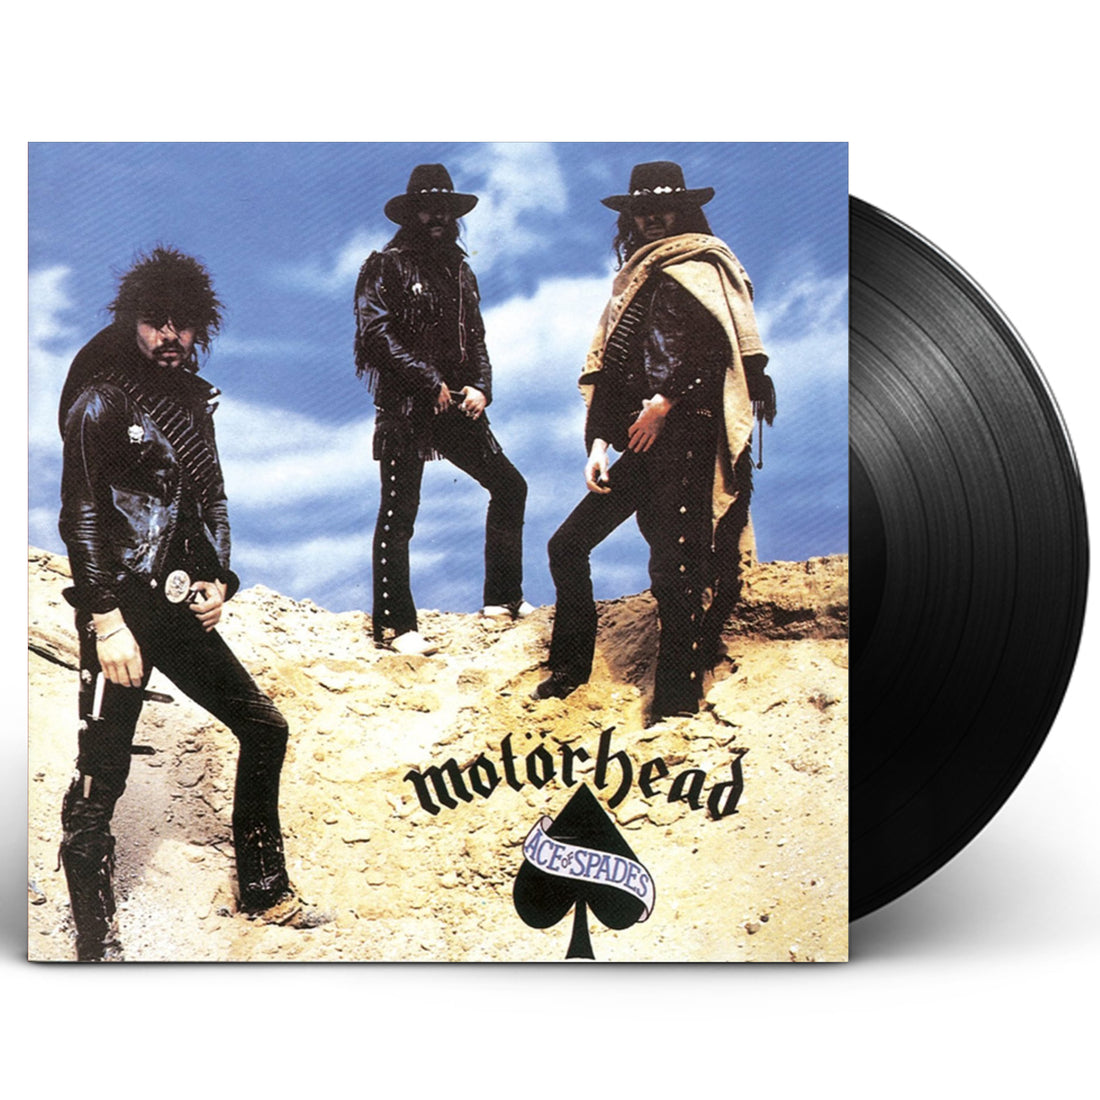 Motorhead "Ace of Spades" LP Vinyl